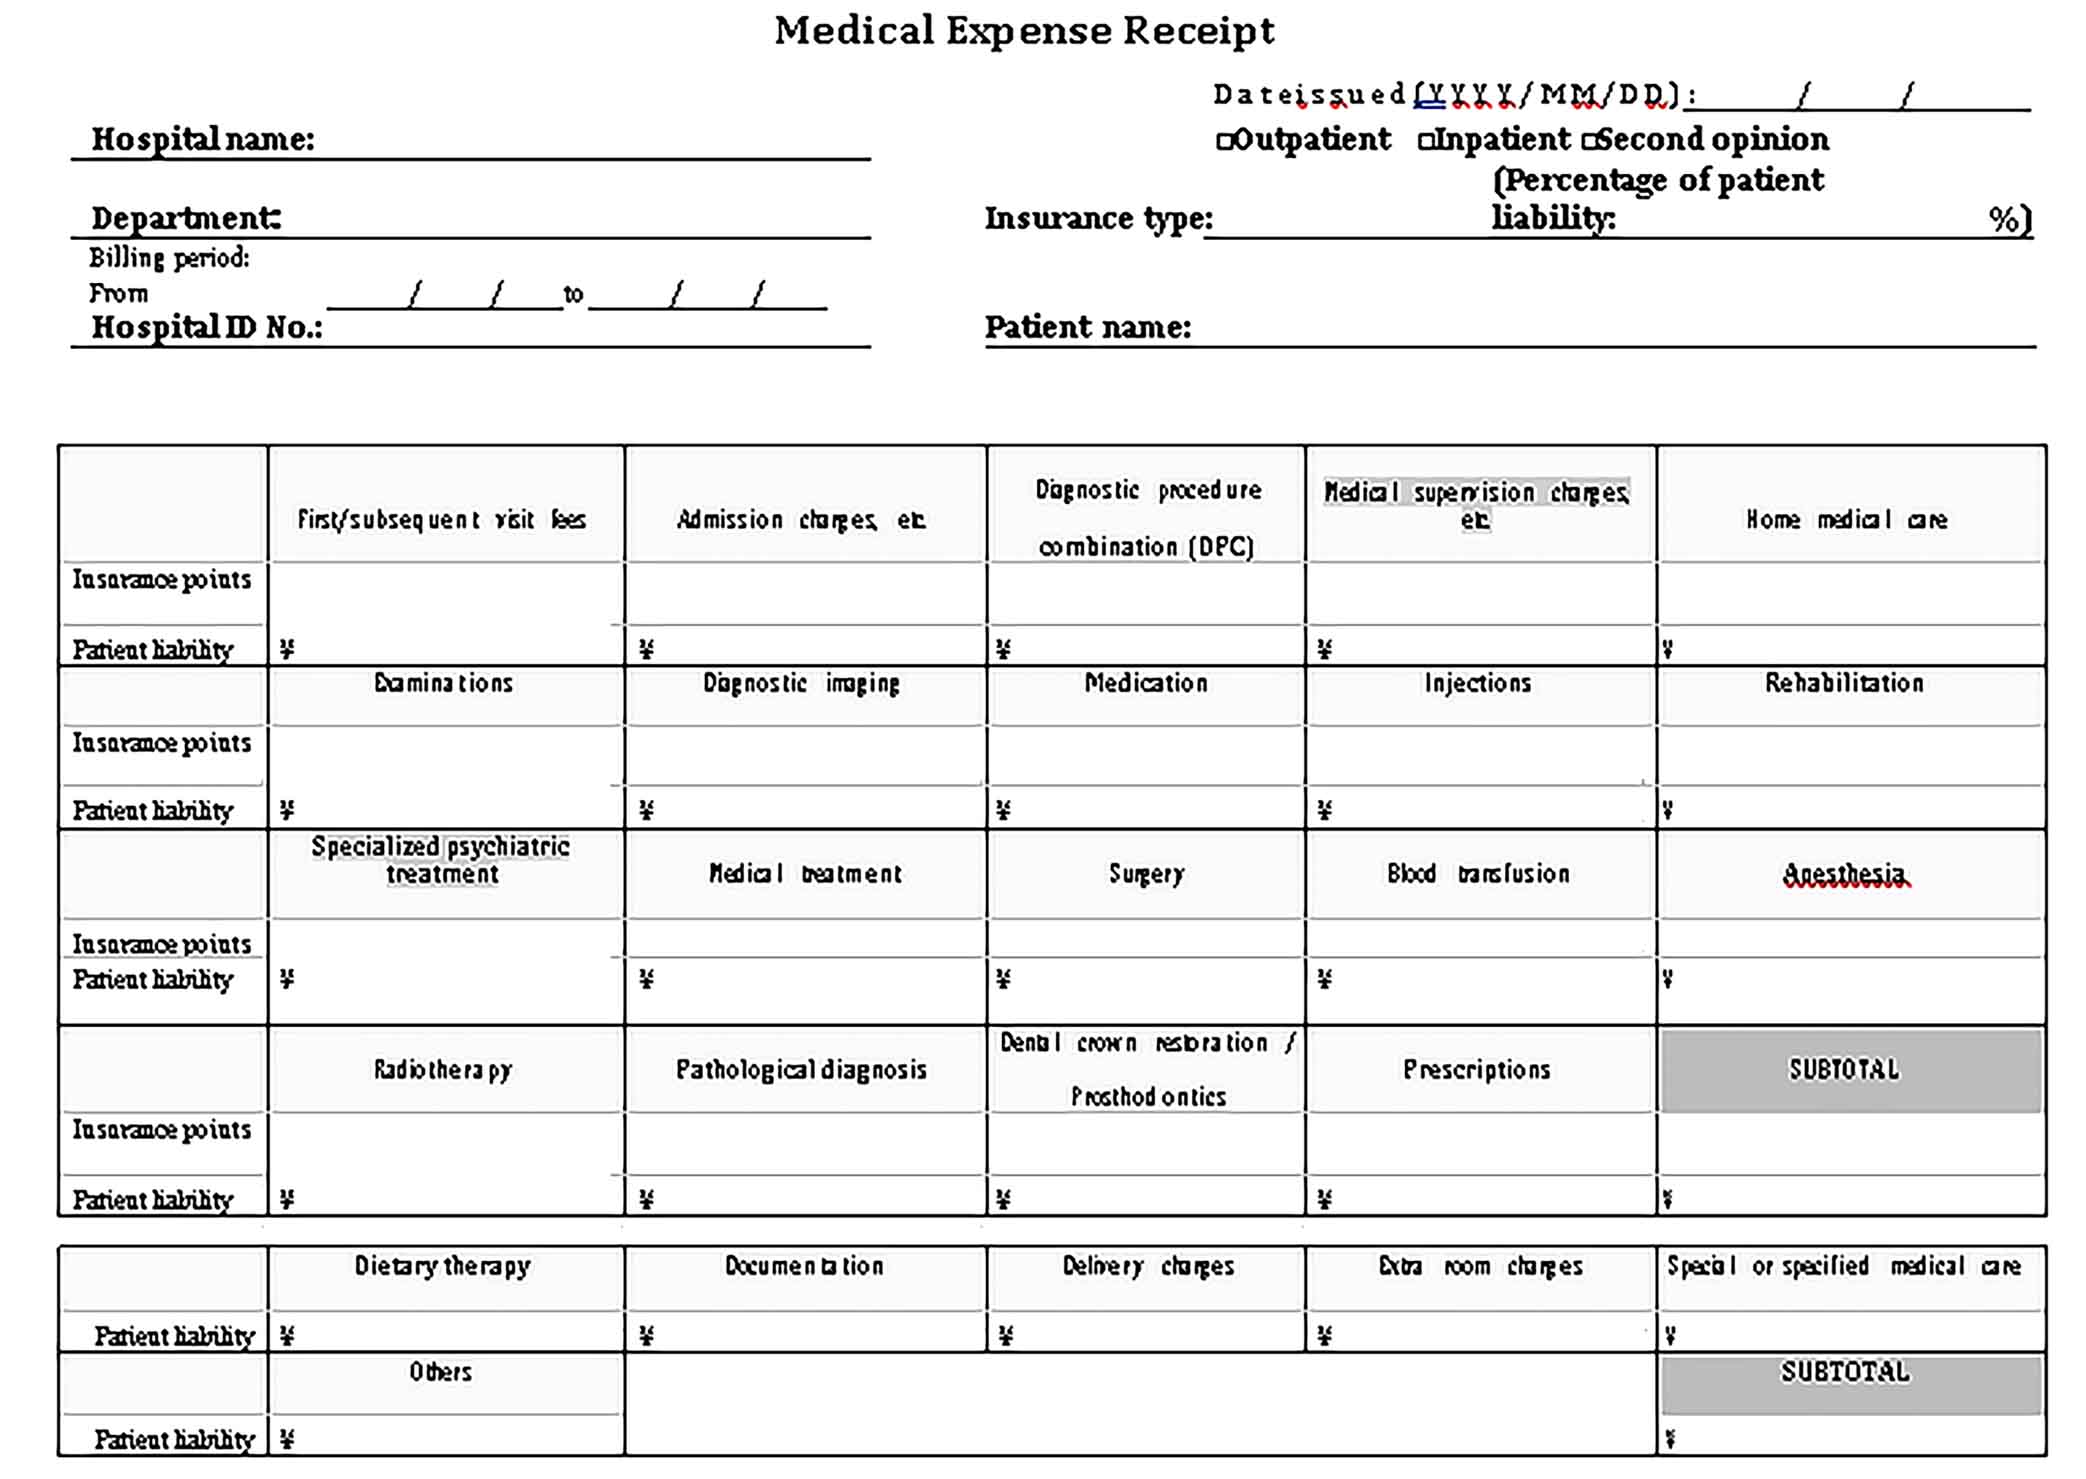 Sample Medical Expense Receipt Templates